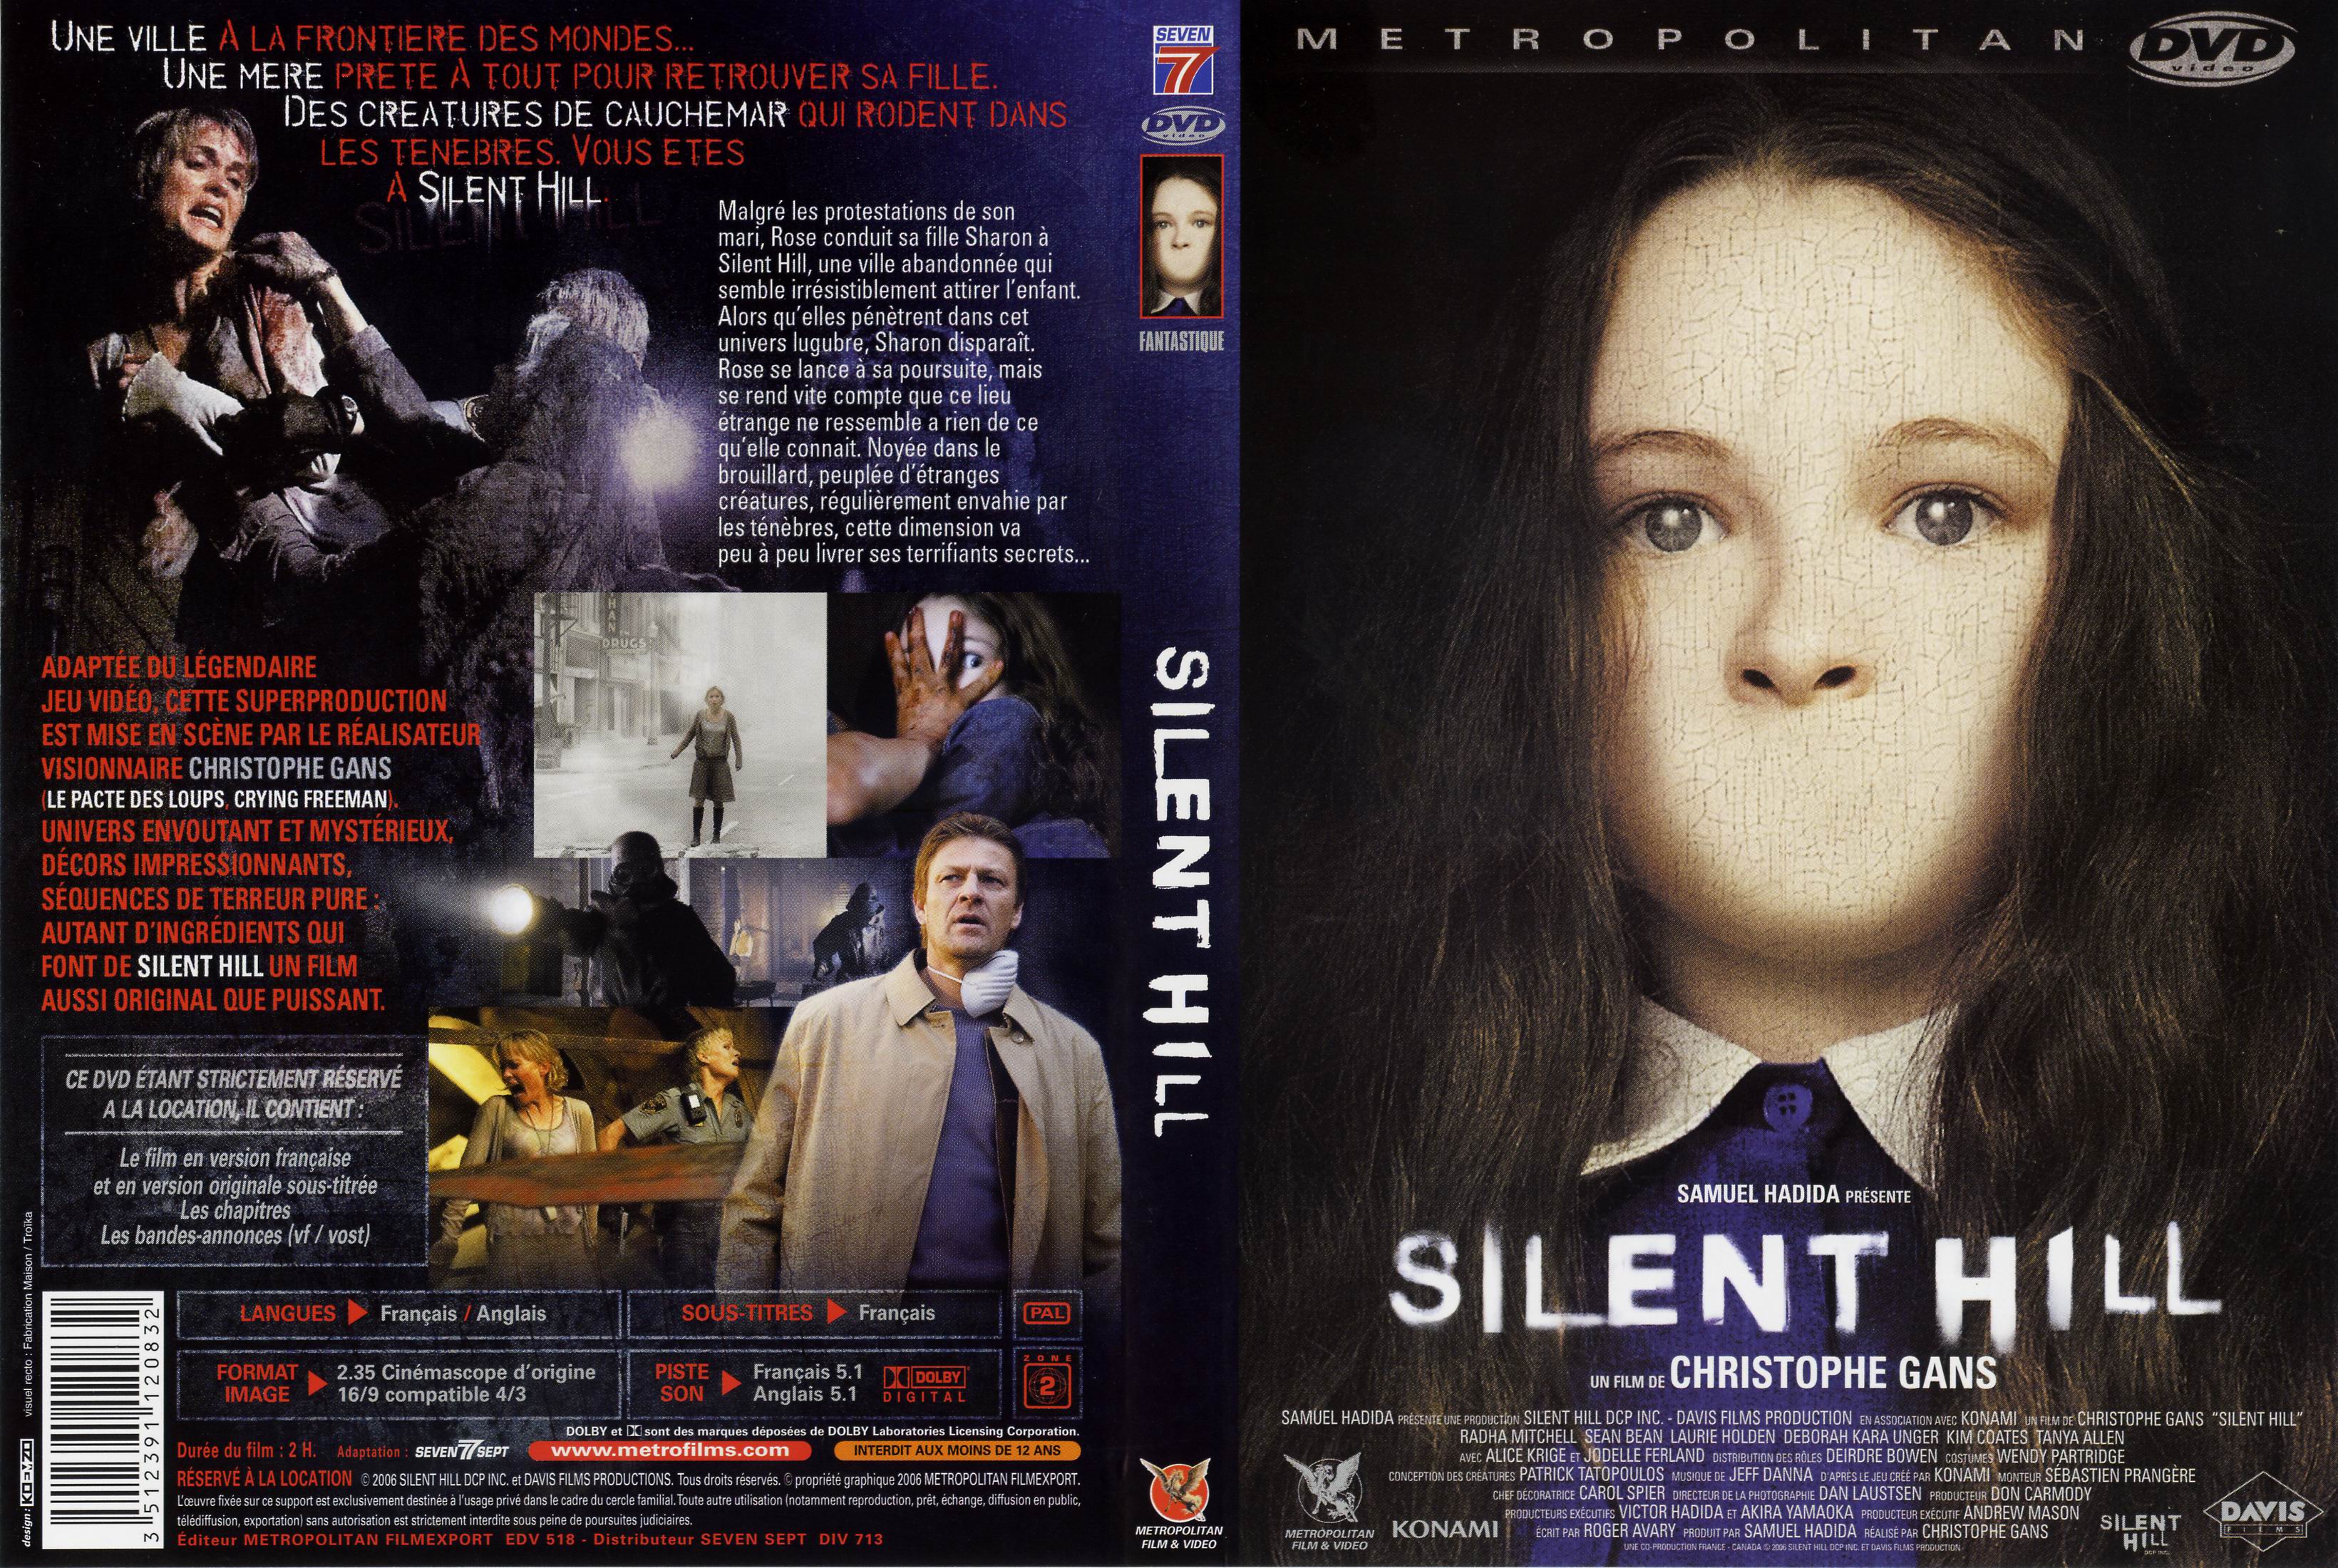 Jaquette DVD Silent hill